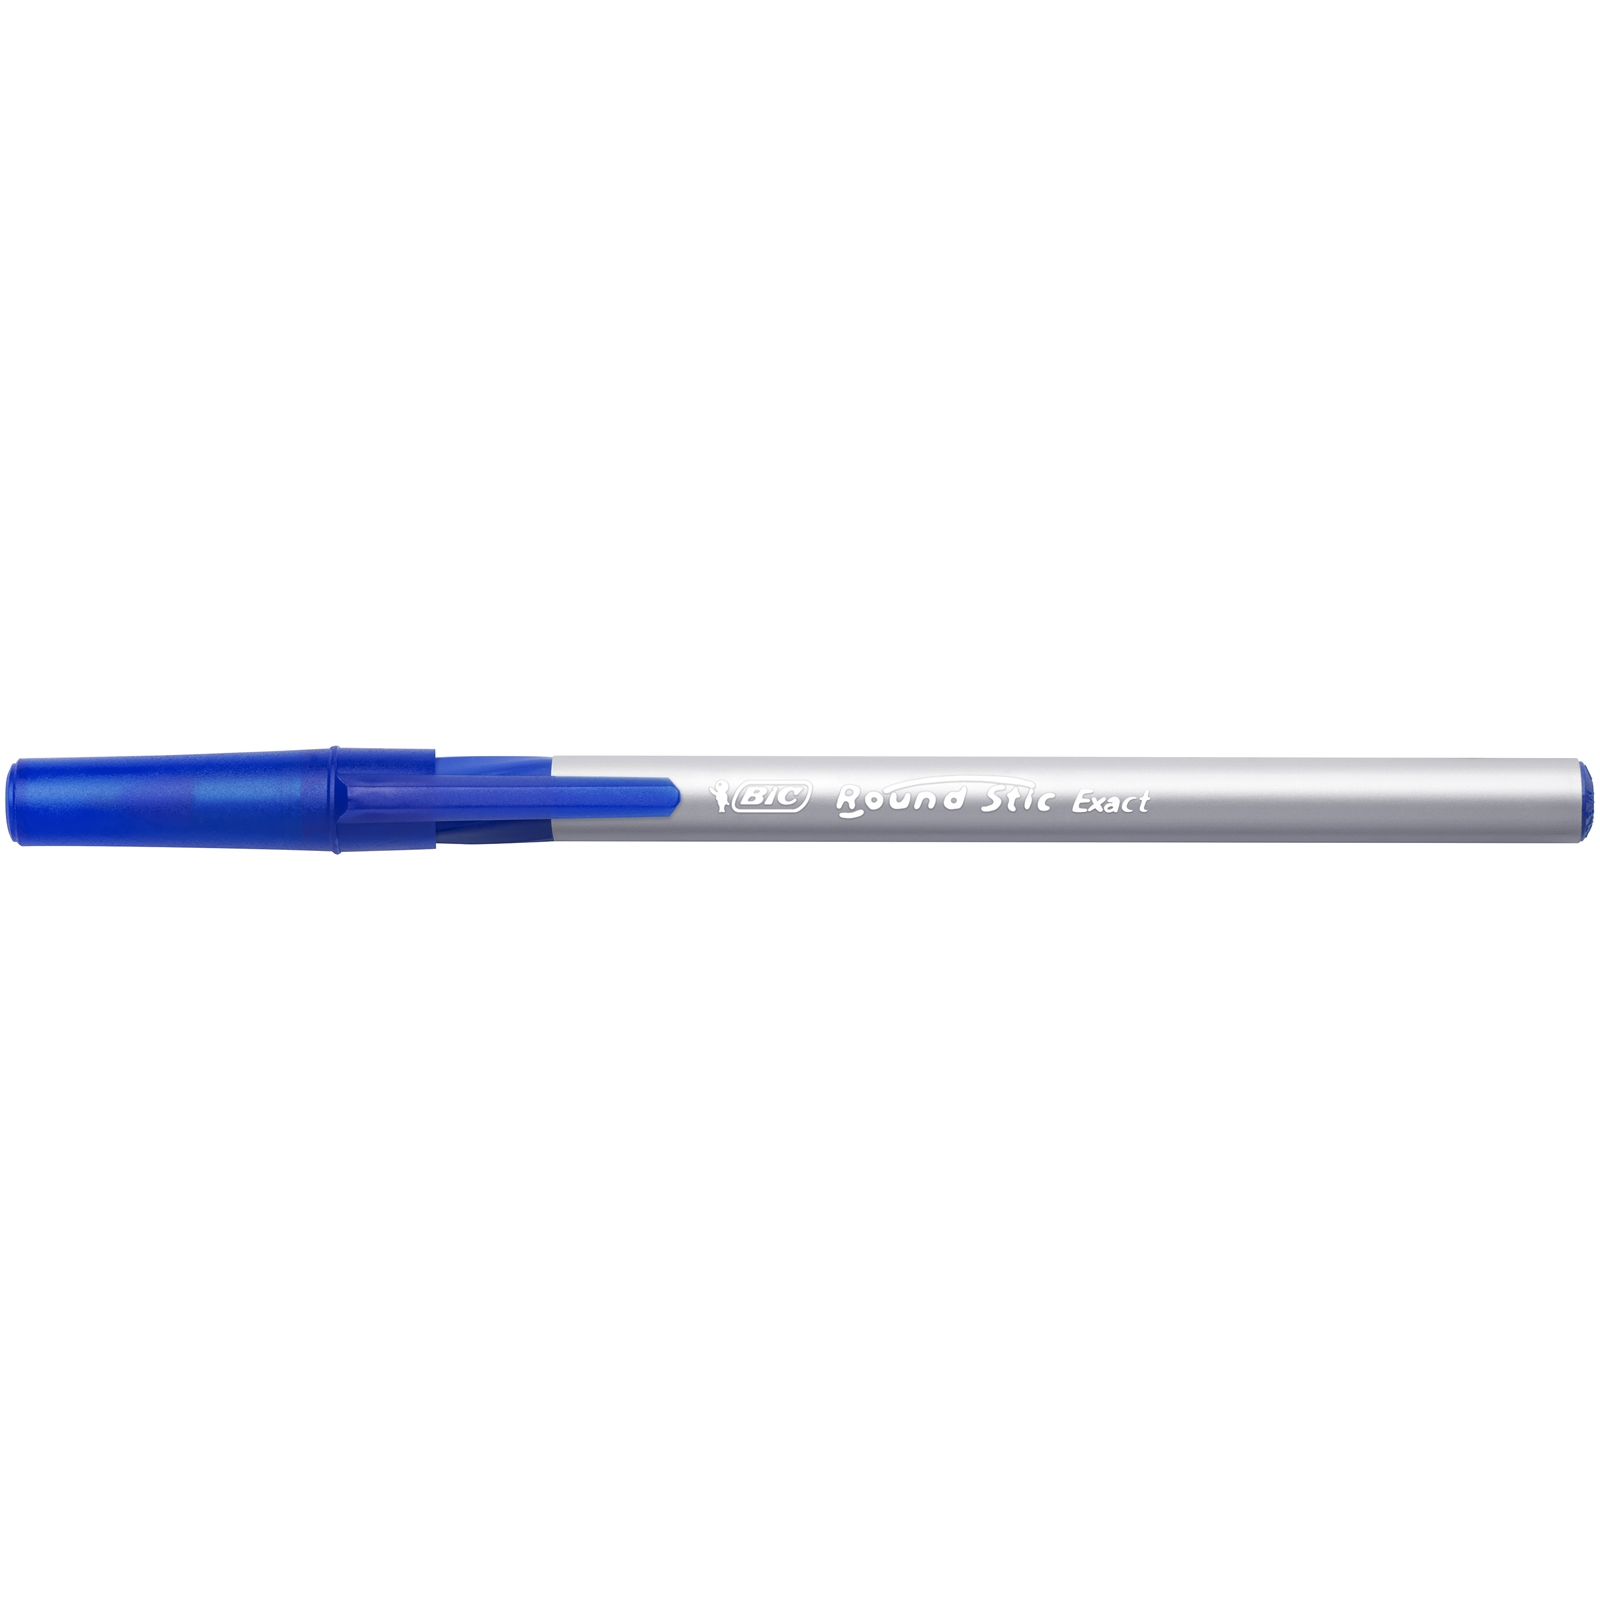 Ручка шариковая BIC Round Stic Exact, 0,36 мм, синий, 4 шт. (932857) - фото 4